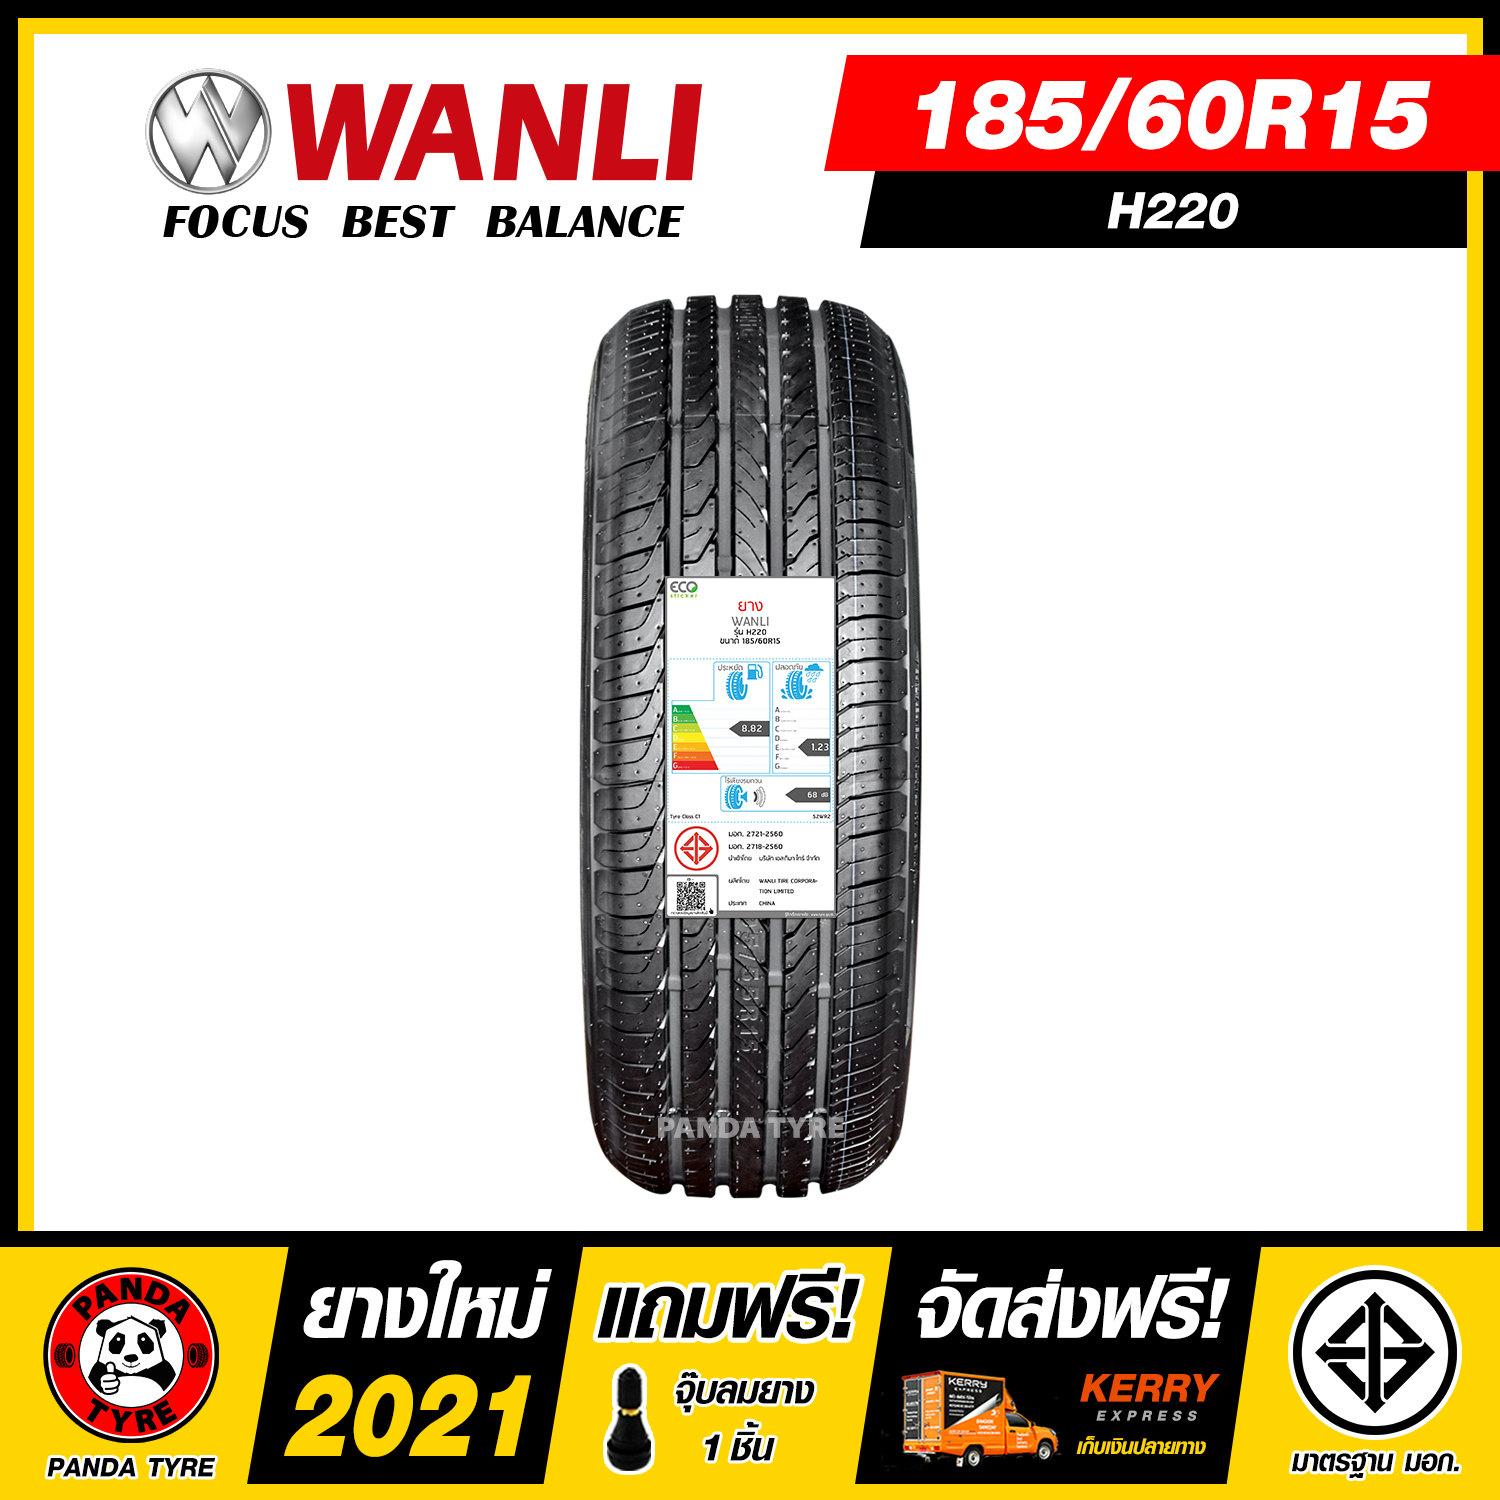 WANLI 185/60R15 ยางรถยนต์ขอบ15 รุ่น H220 - 1 เส้น (ยางใหม่ผลิตปี 2021)